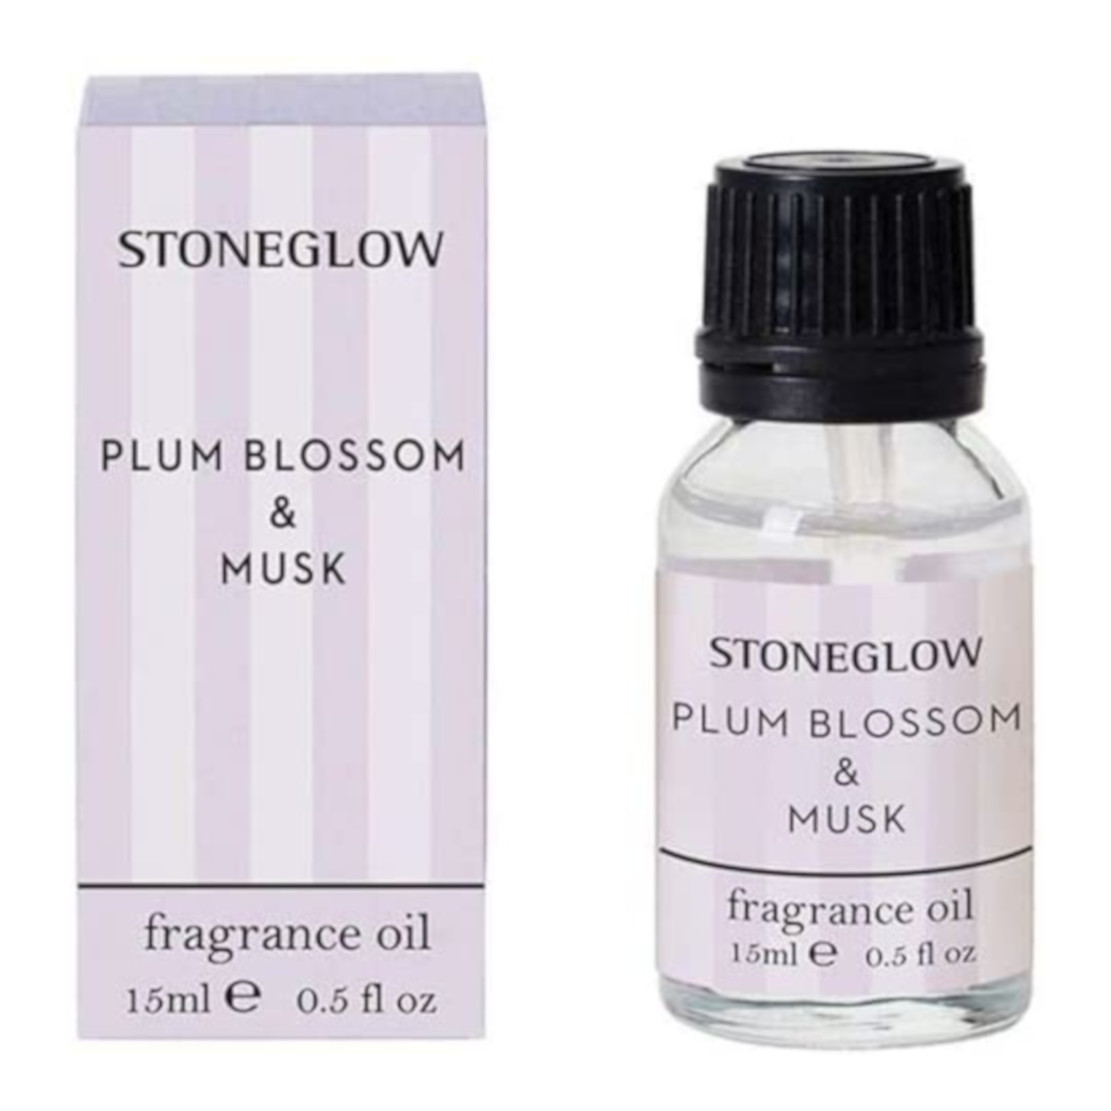 Stoneglow Plum Blossom & Musk Fragrance Oil 15ml